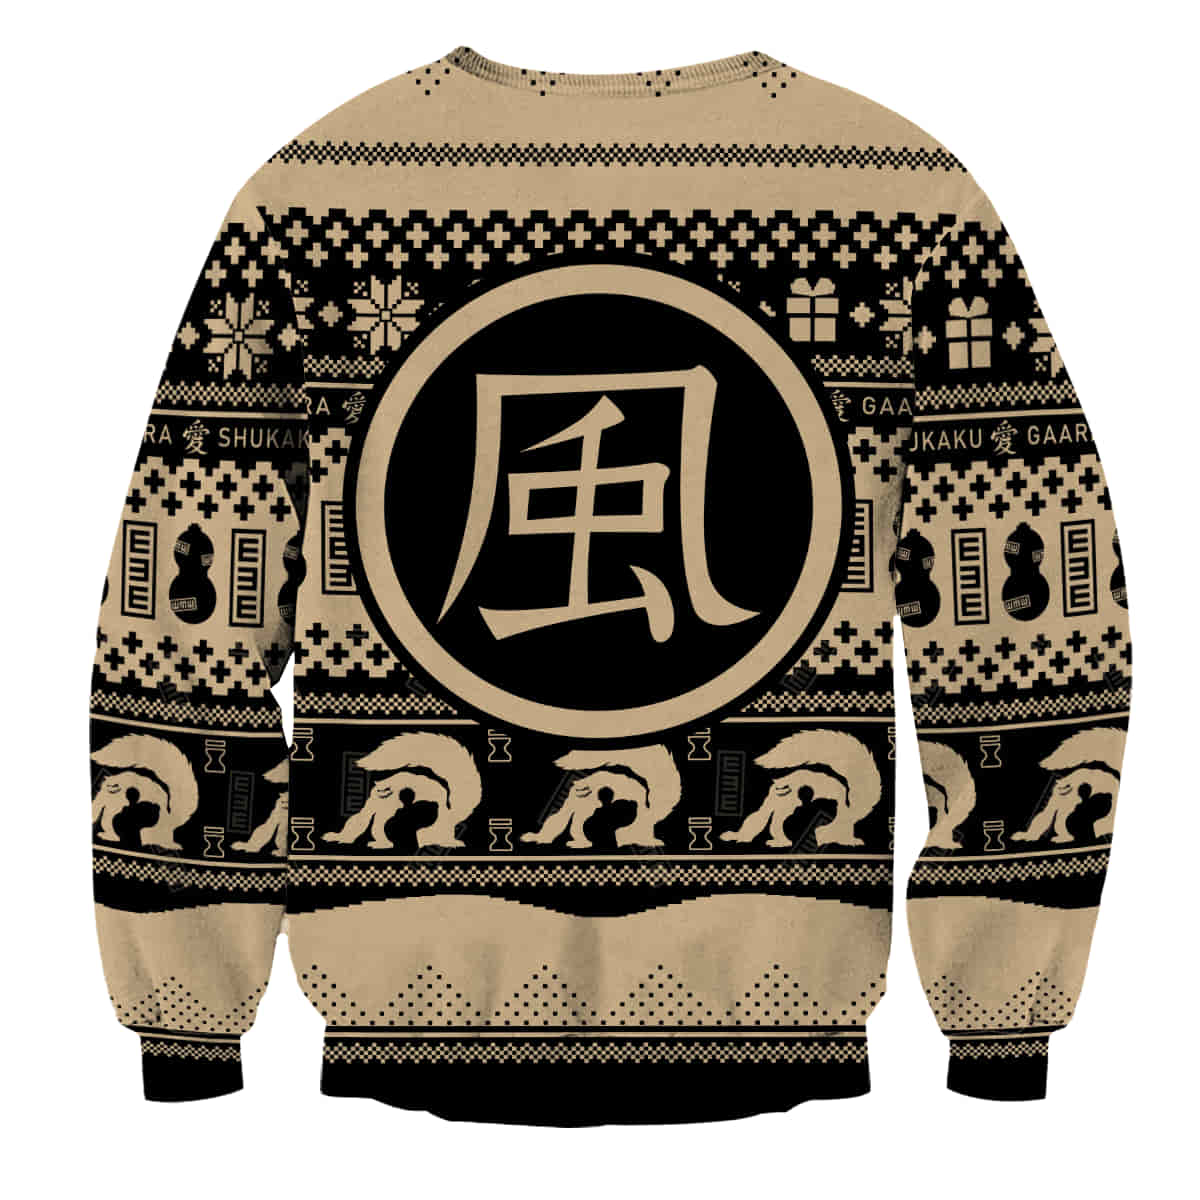 Gaara Sand Wool Knitted Sweater, Naruto Manga All Over Print 3D Sweater